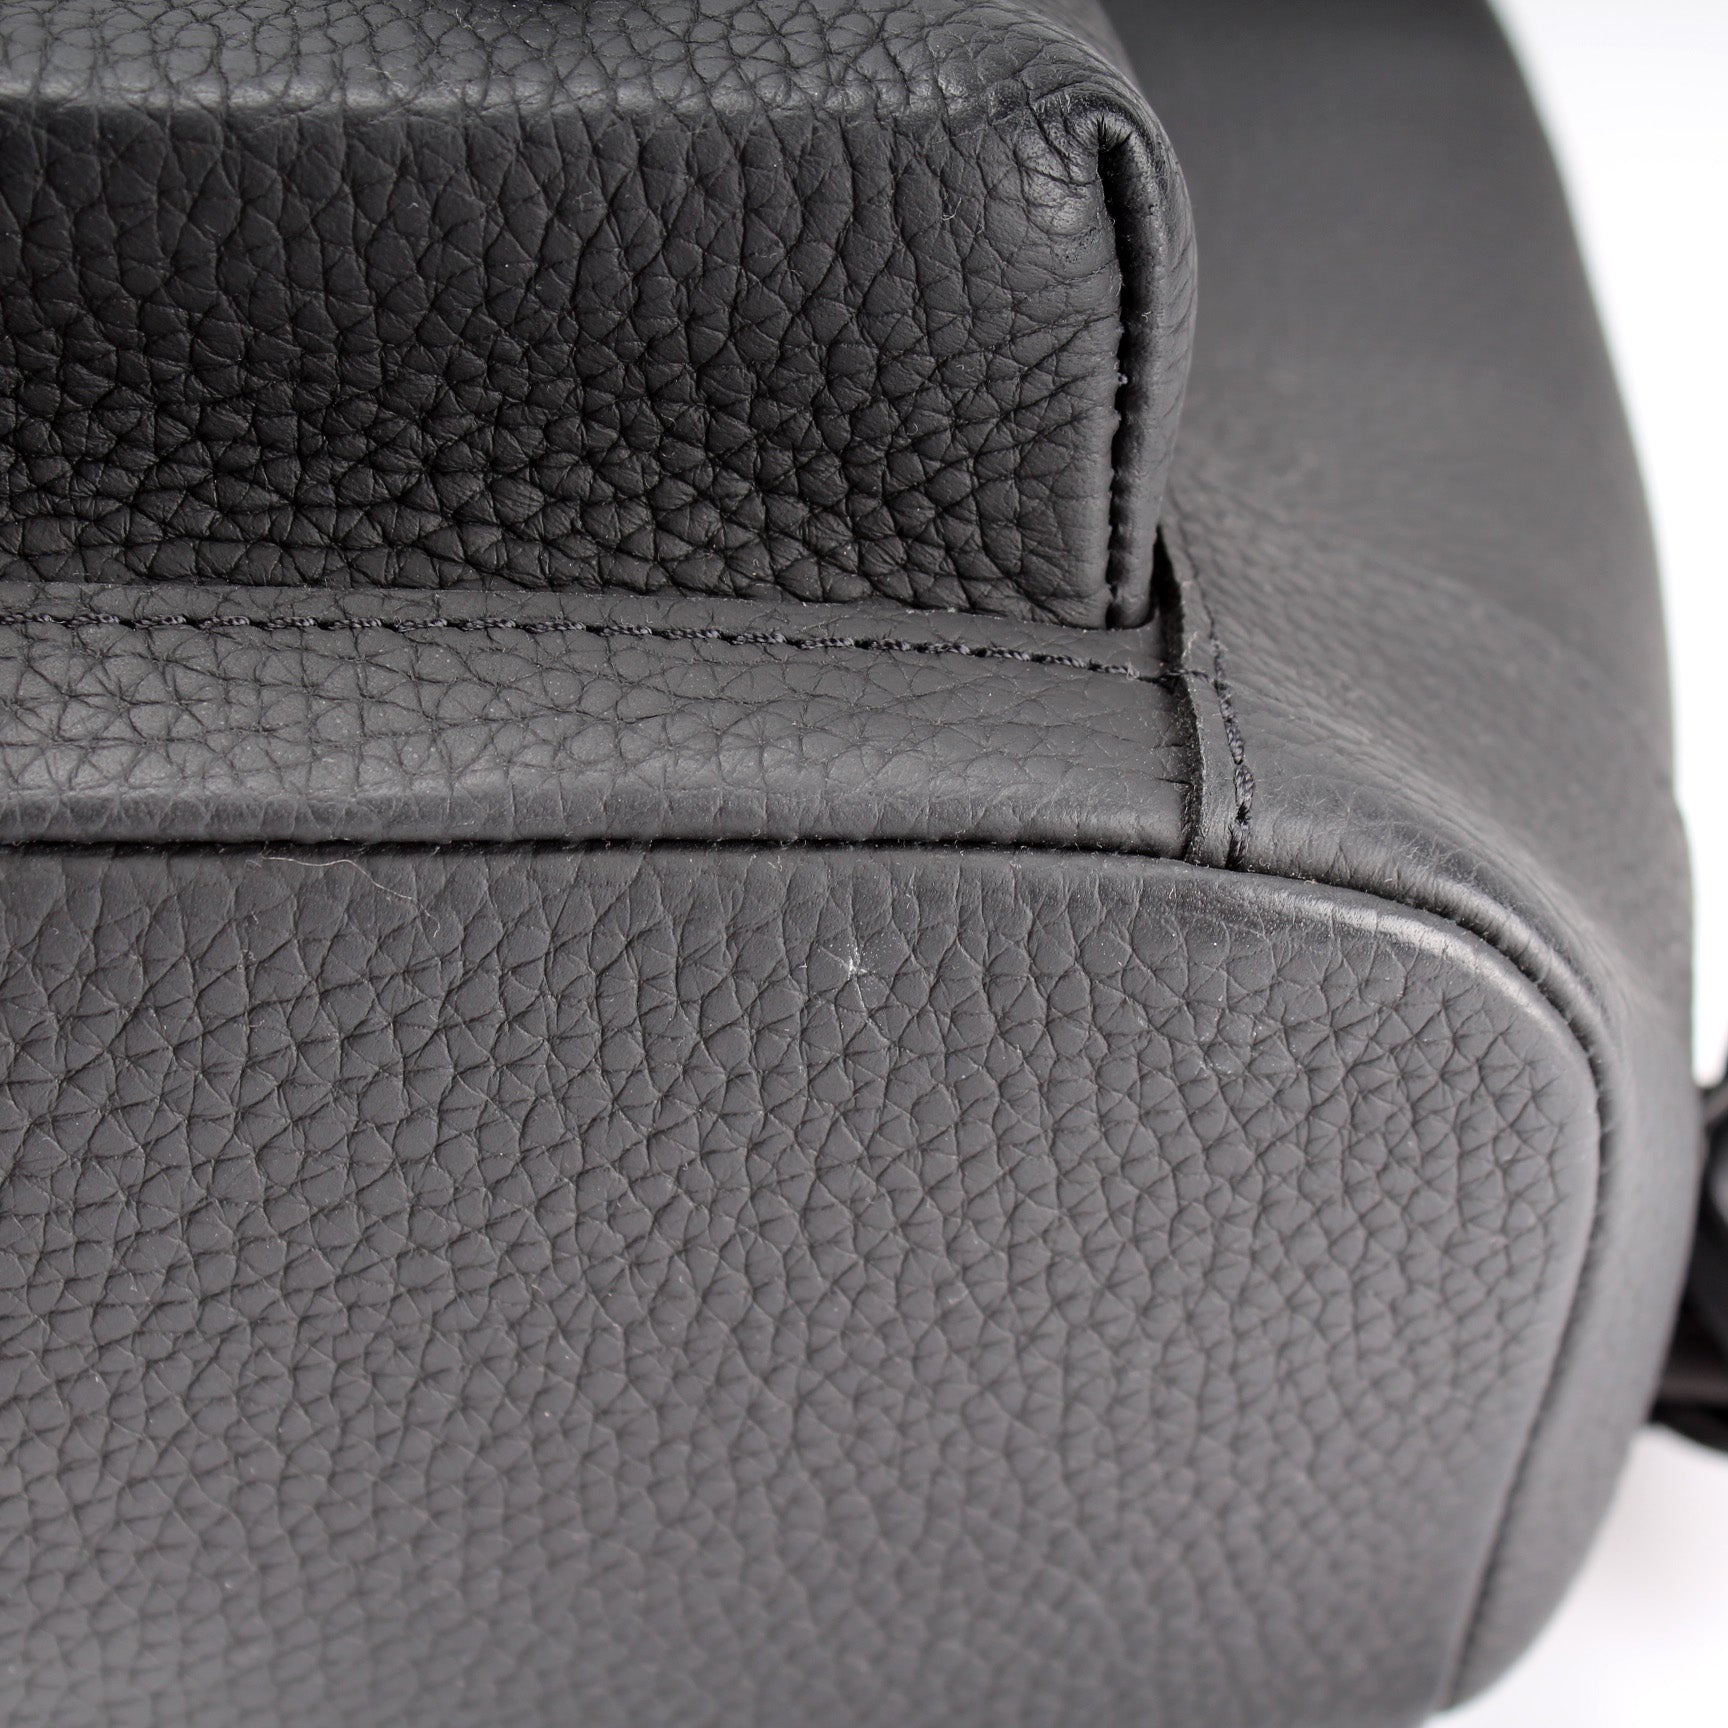 Ba Lô Christopher Slim Backpack Taurillon Leather đen best quality